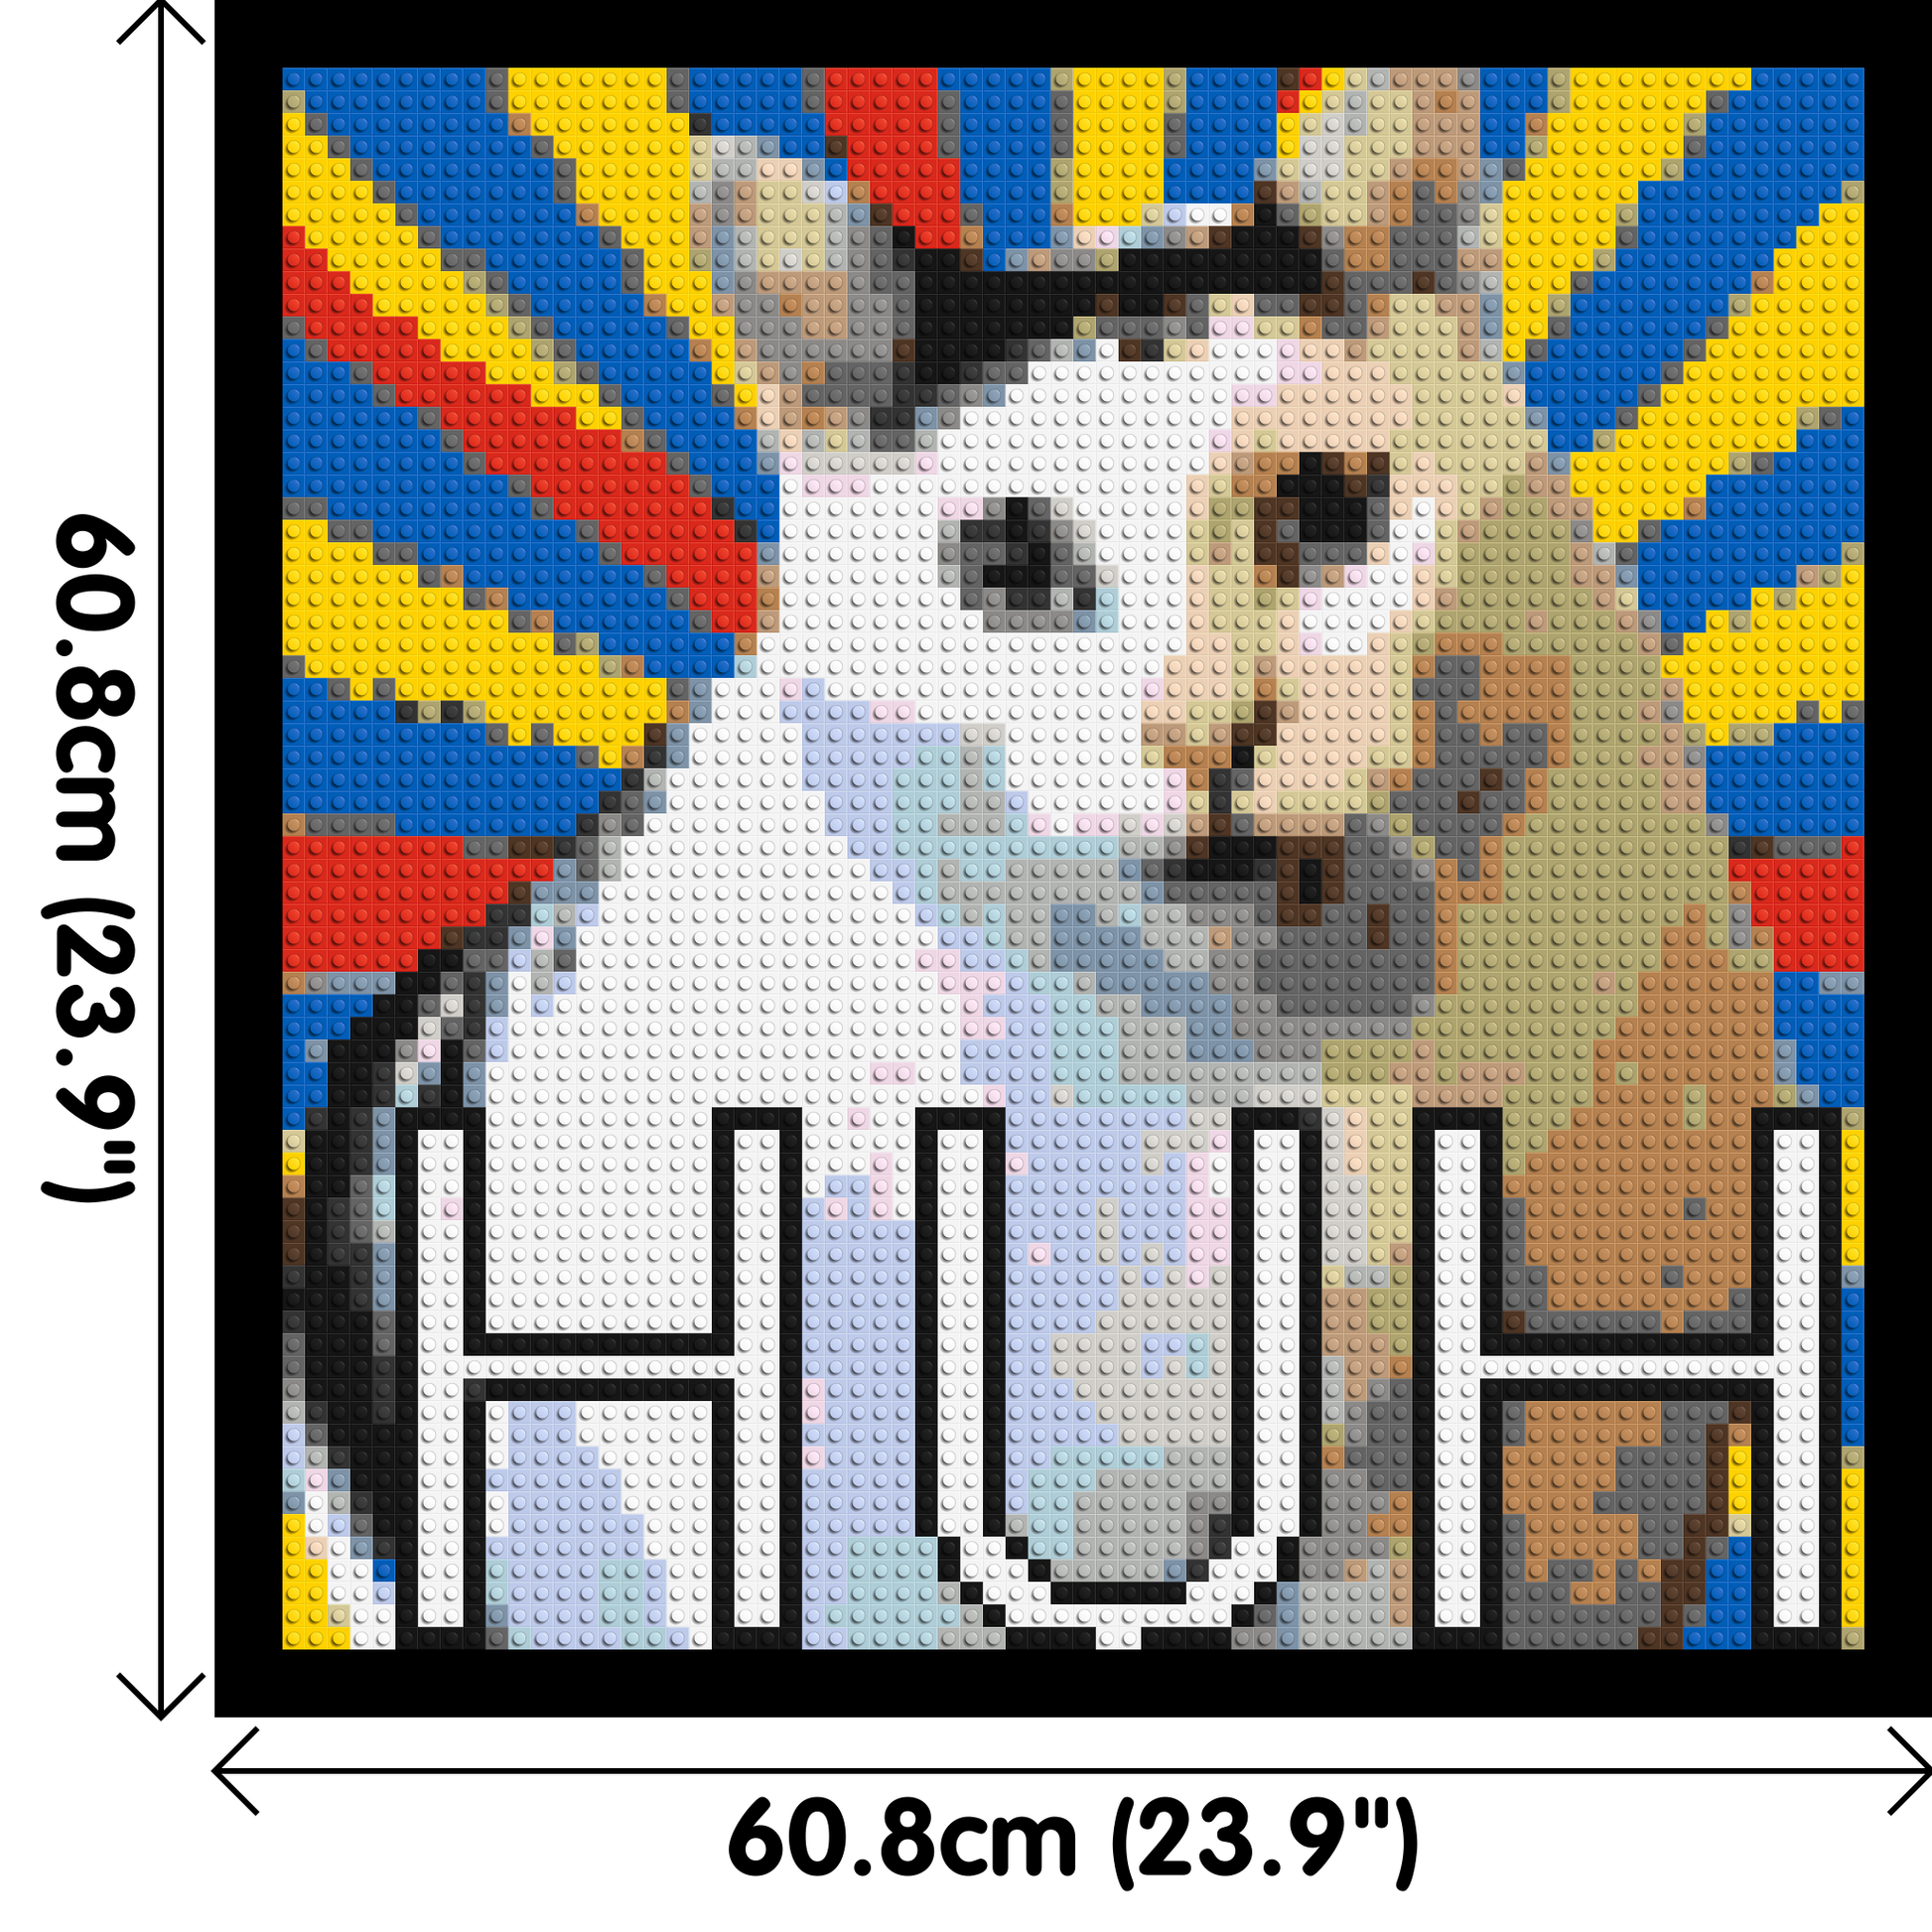 Huh Cat Meme - Brick Art Mosaic Kit 3x3 dimensions with frame